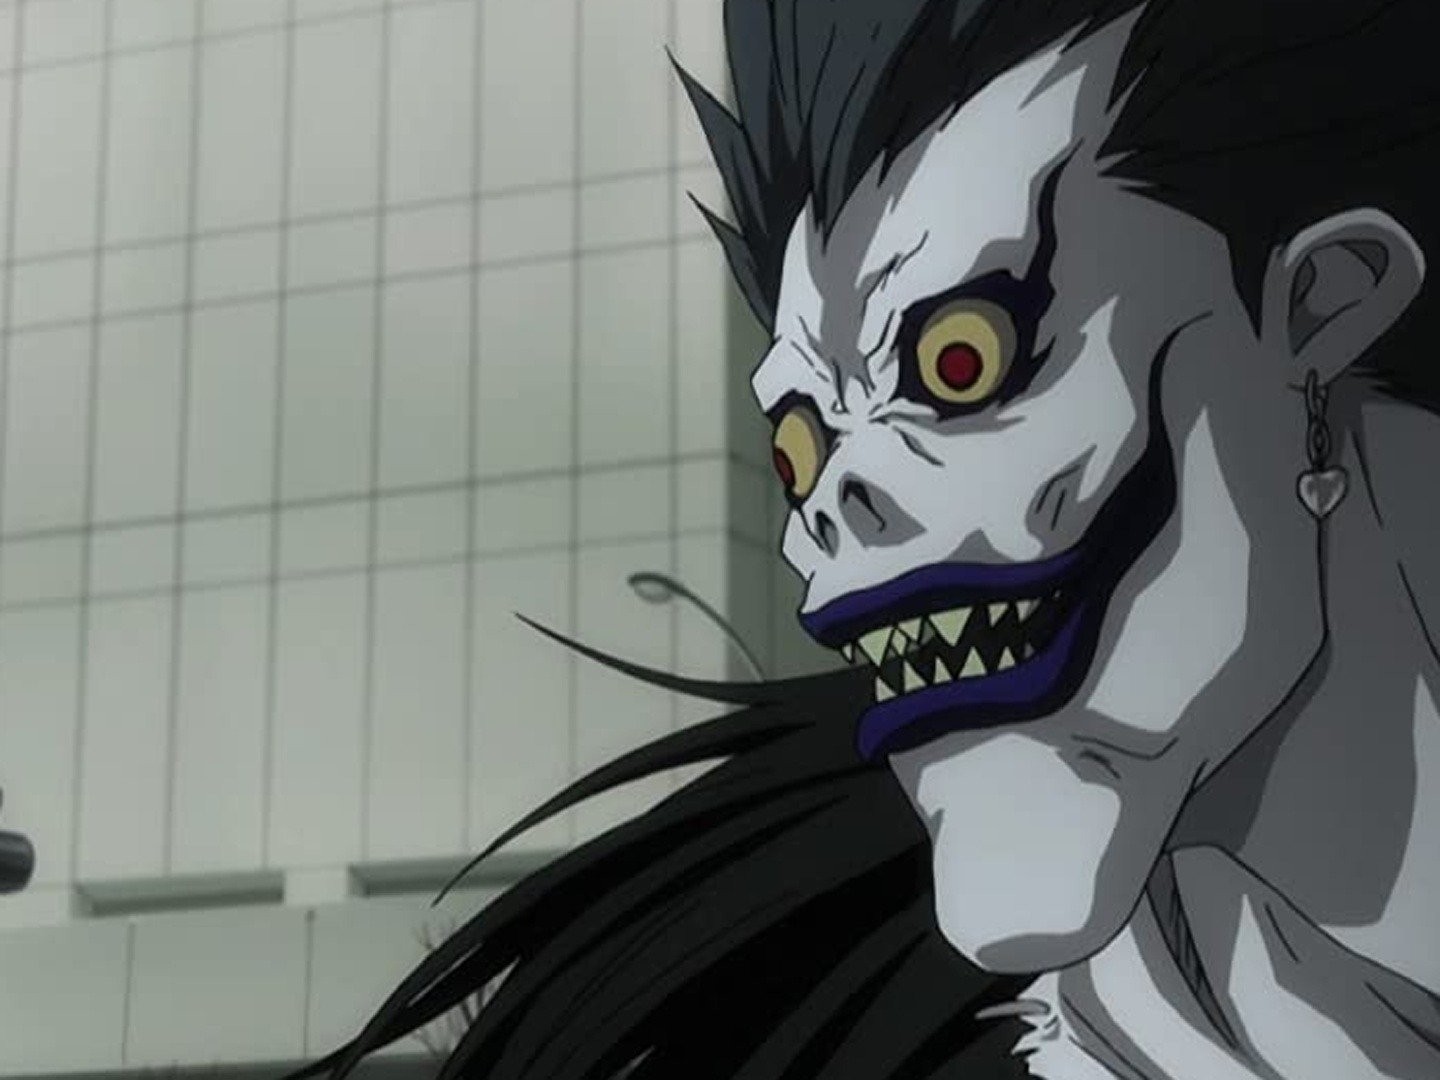 Death Note - Serie completa: 37 episodios + Death Note Relight en DVD